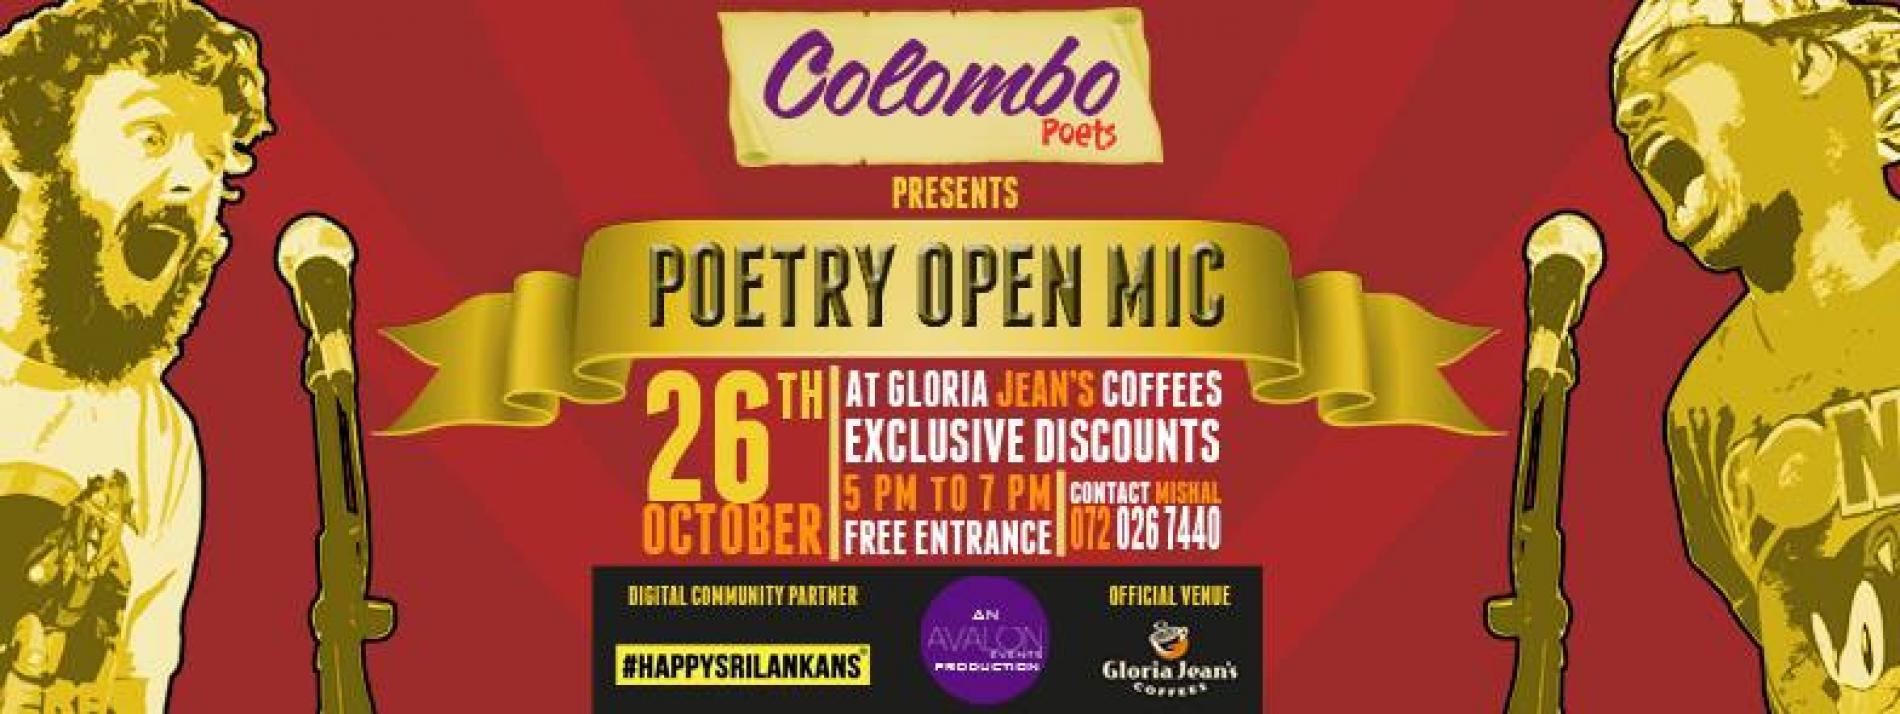 Colombo Poets Presents: Poetry Open Mic